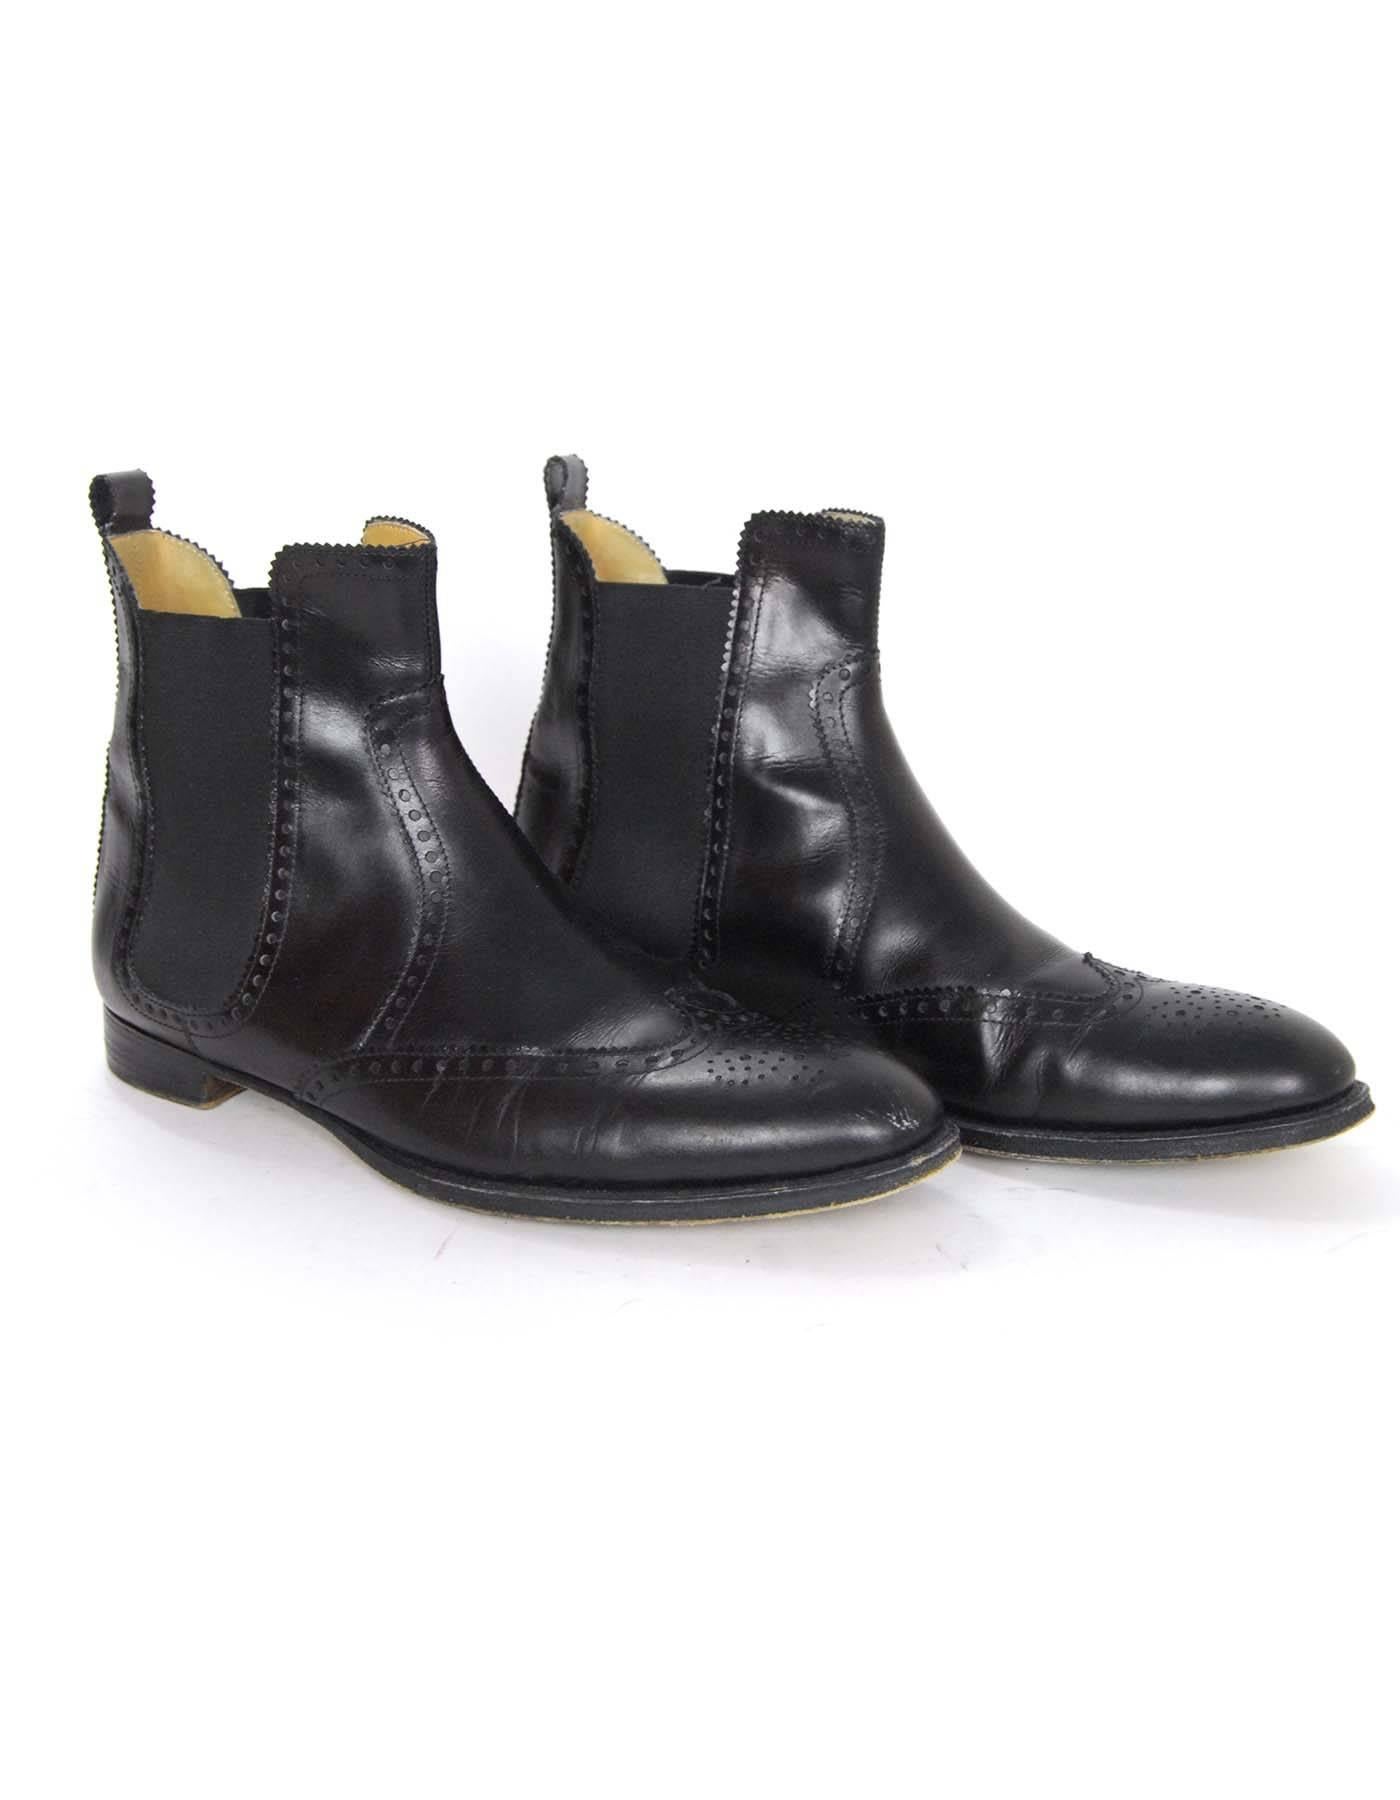 Women's Hermes Black Leather Spectator Brighton Ankle Boots Sz 41 rt. $1, 225